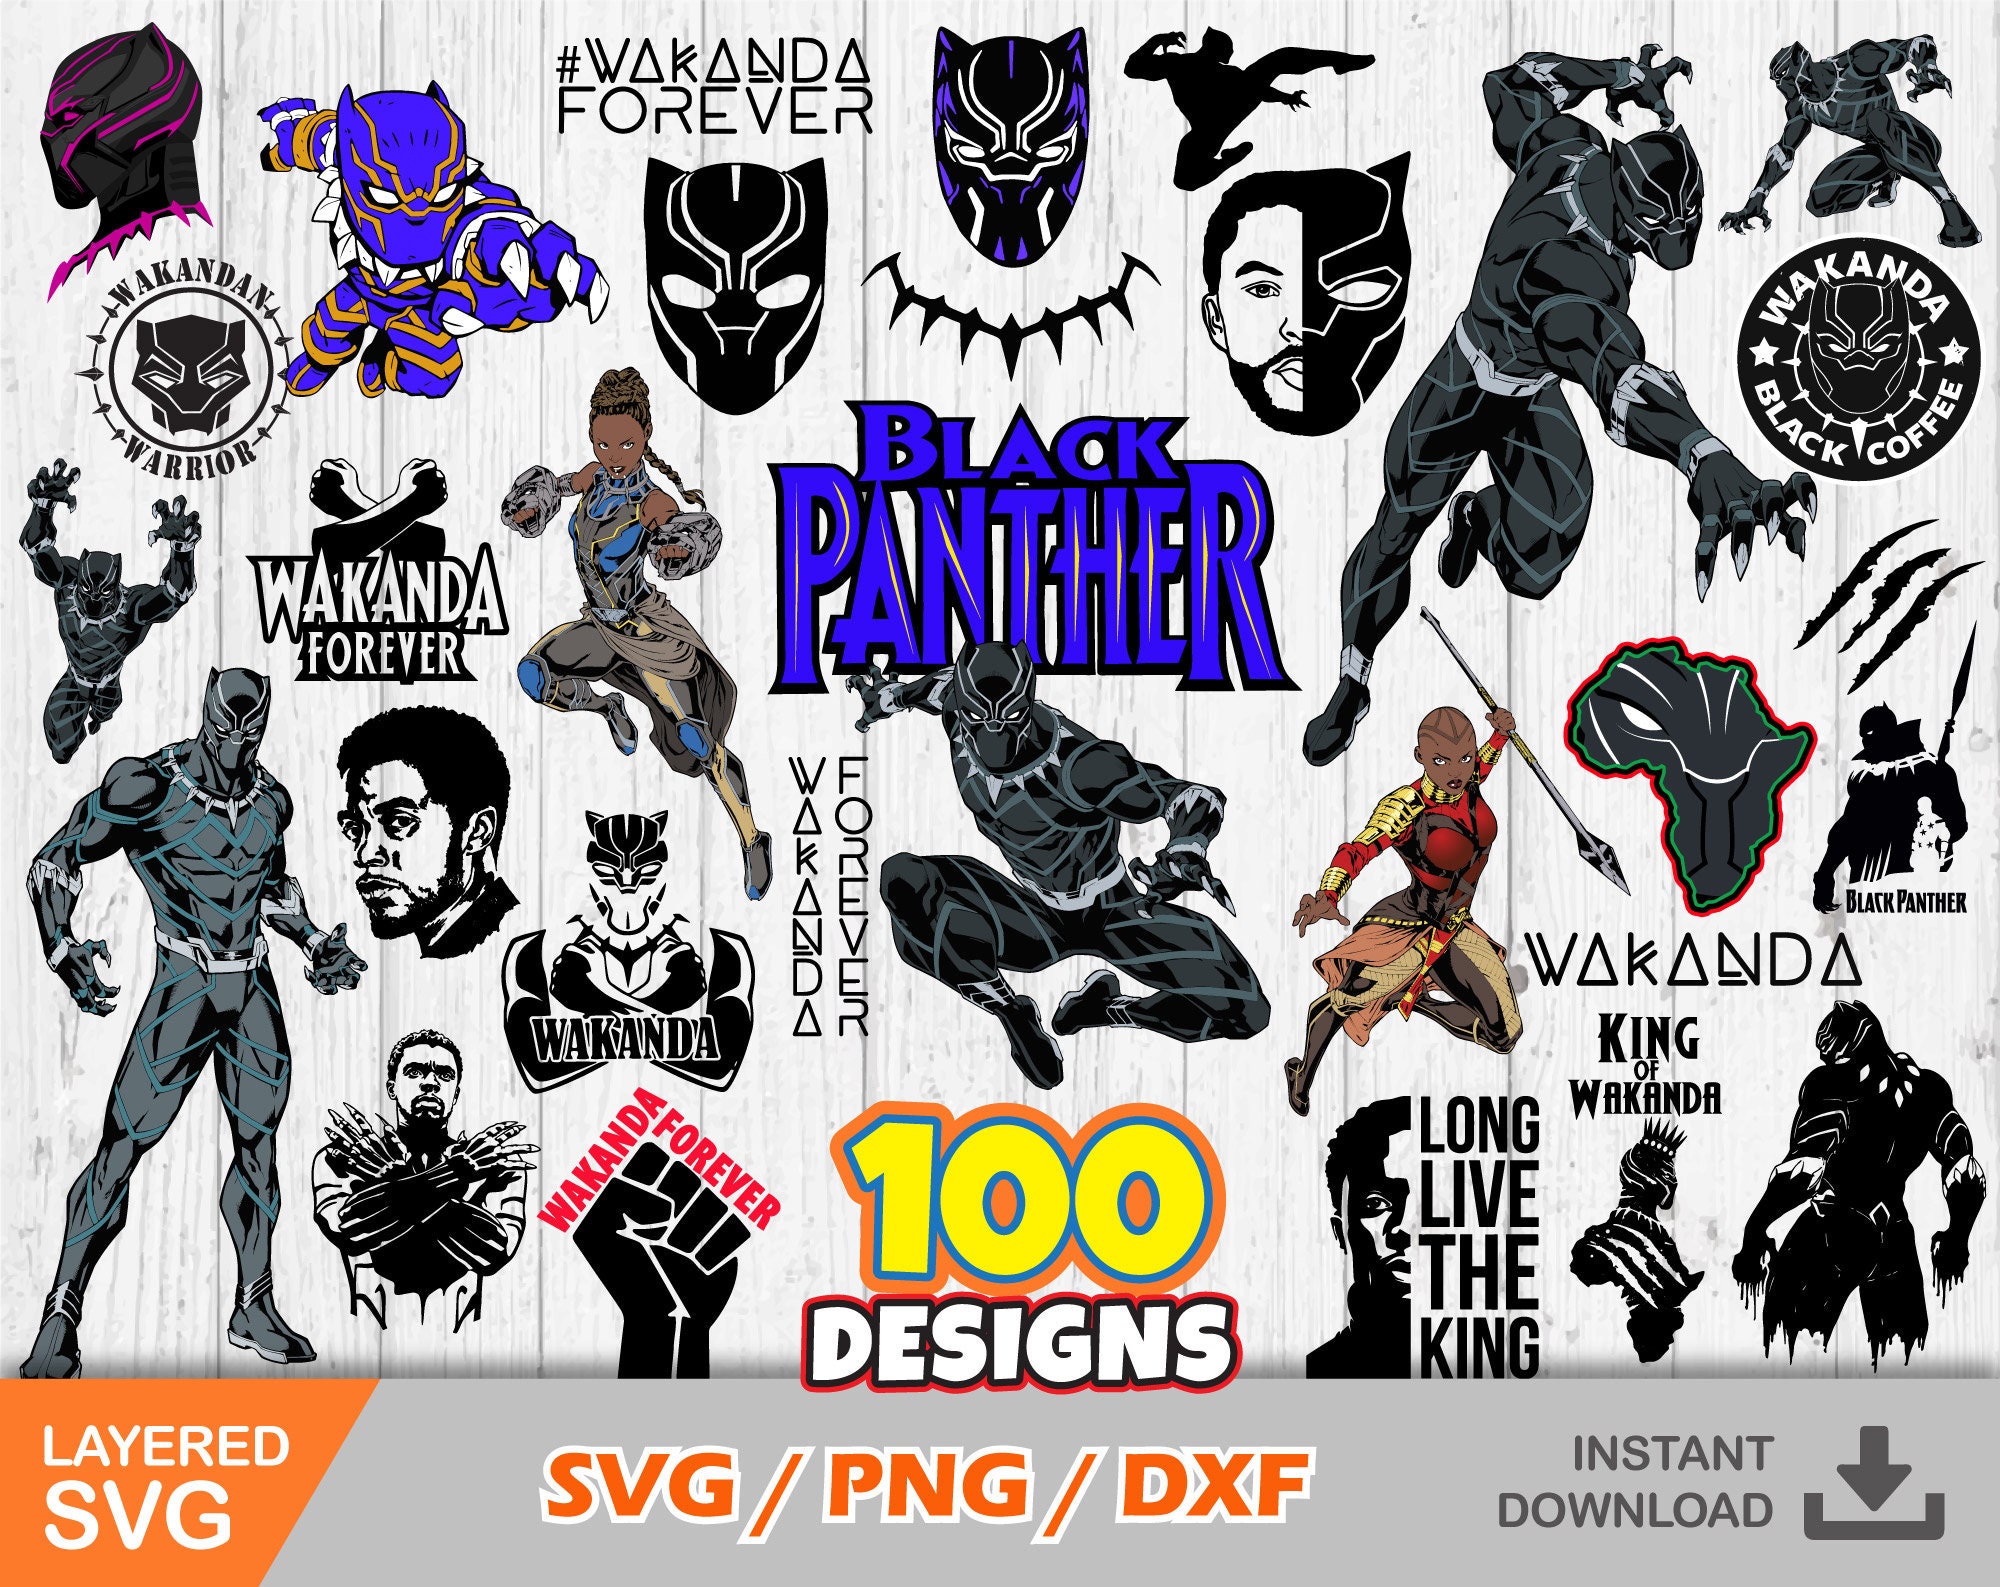 Black Panther Wakanda Forever Exclusive Foil Art Print | AMC Theatres Movie  Merchandise